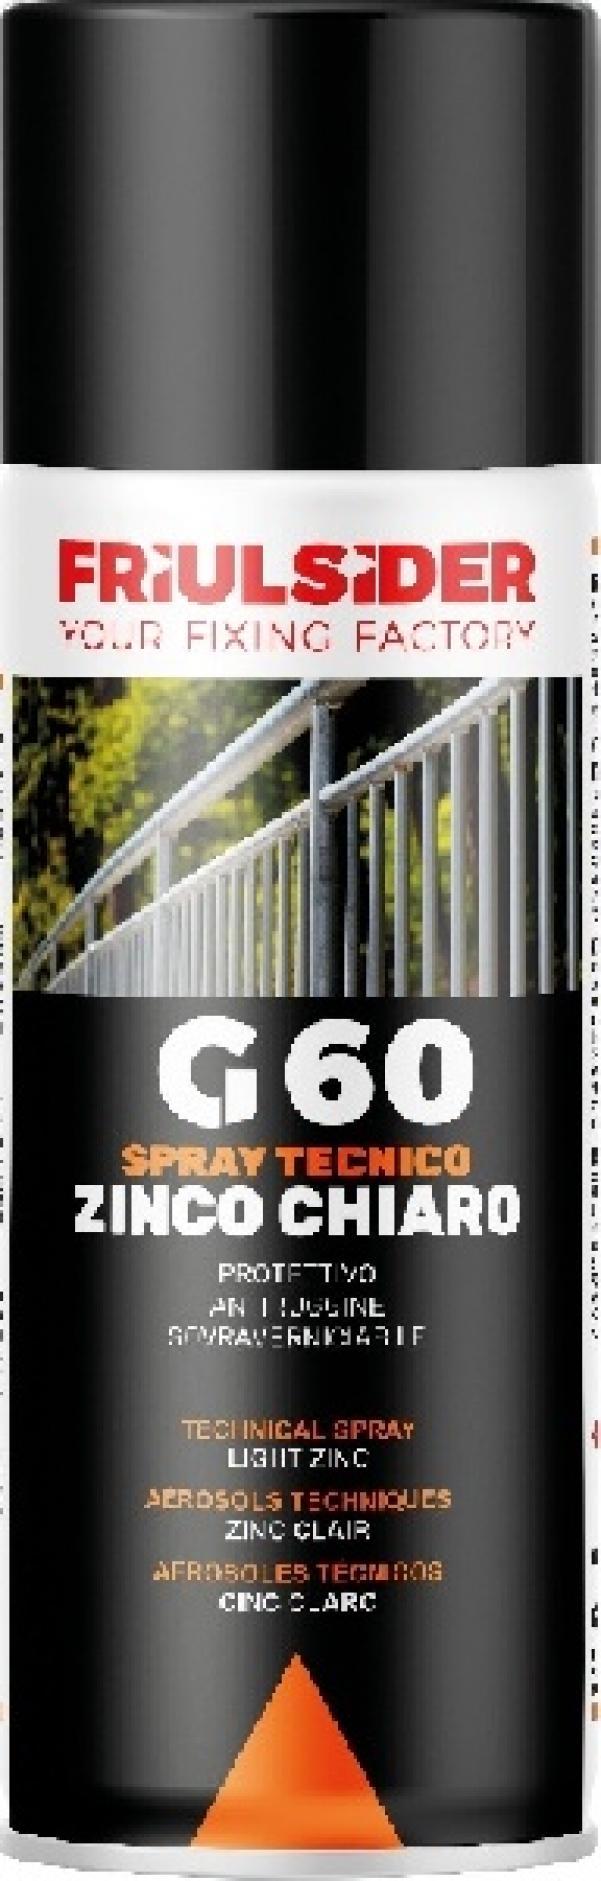 Zinco Chiaro Spray 400ml Friulsider G6000